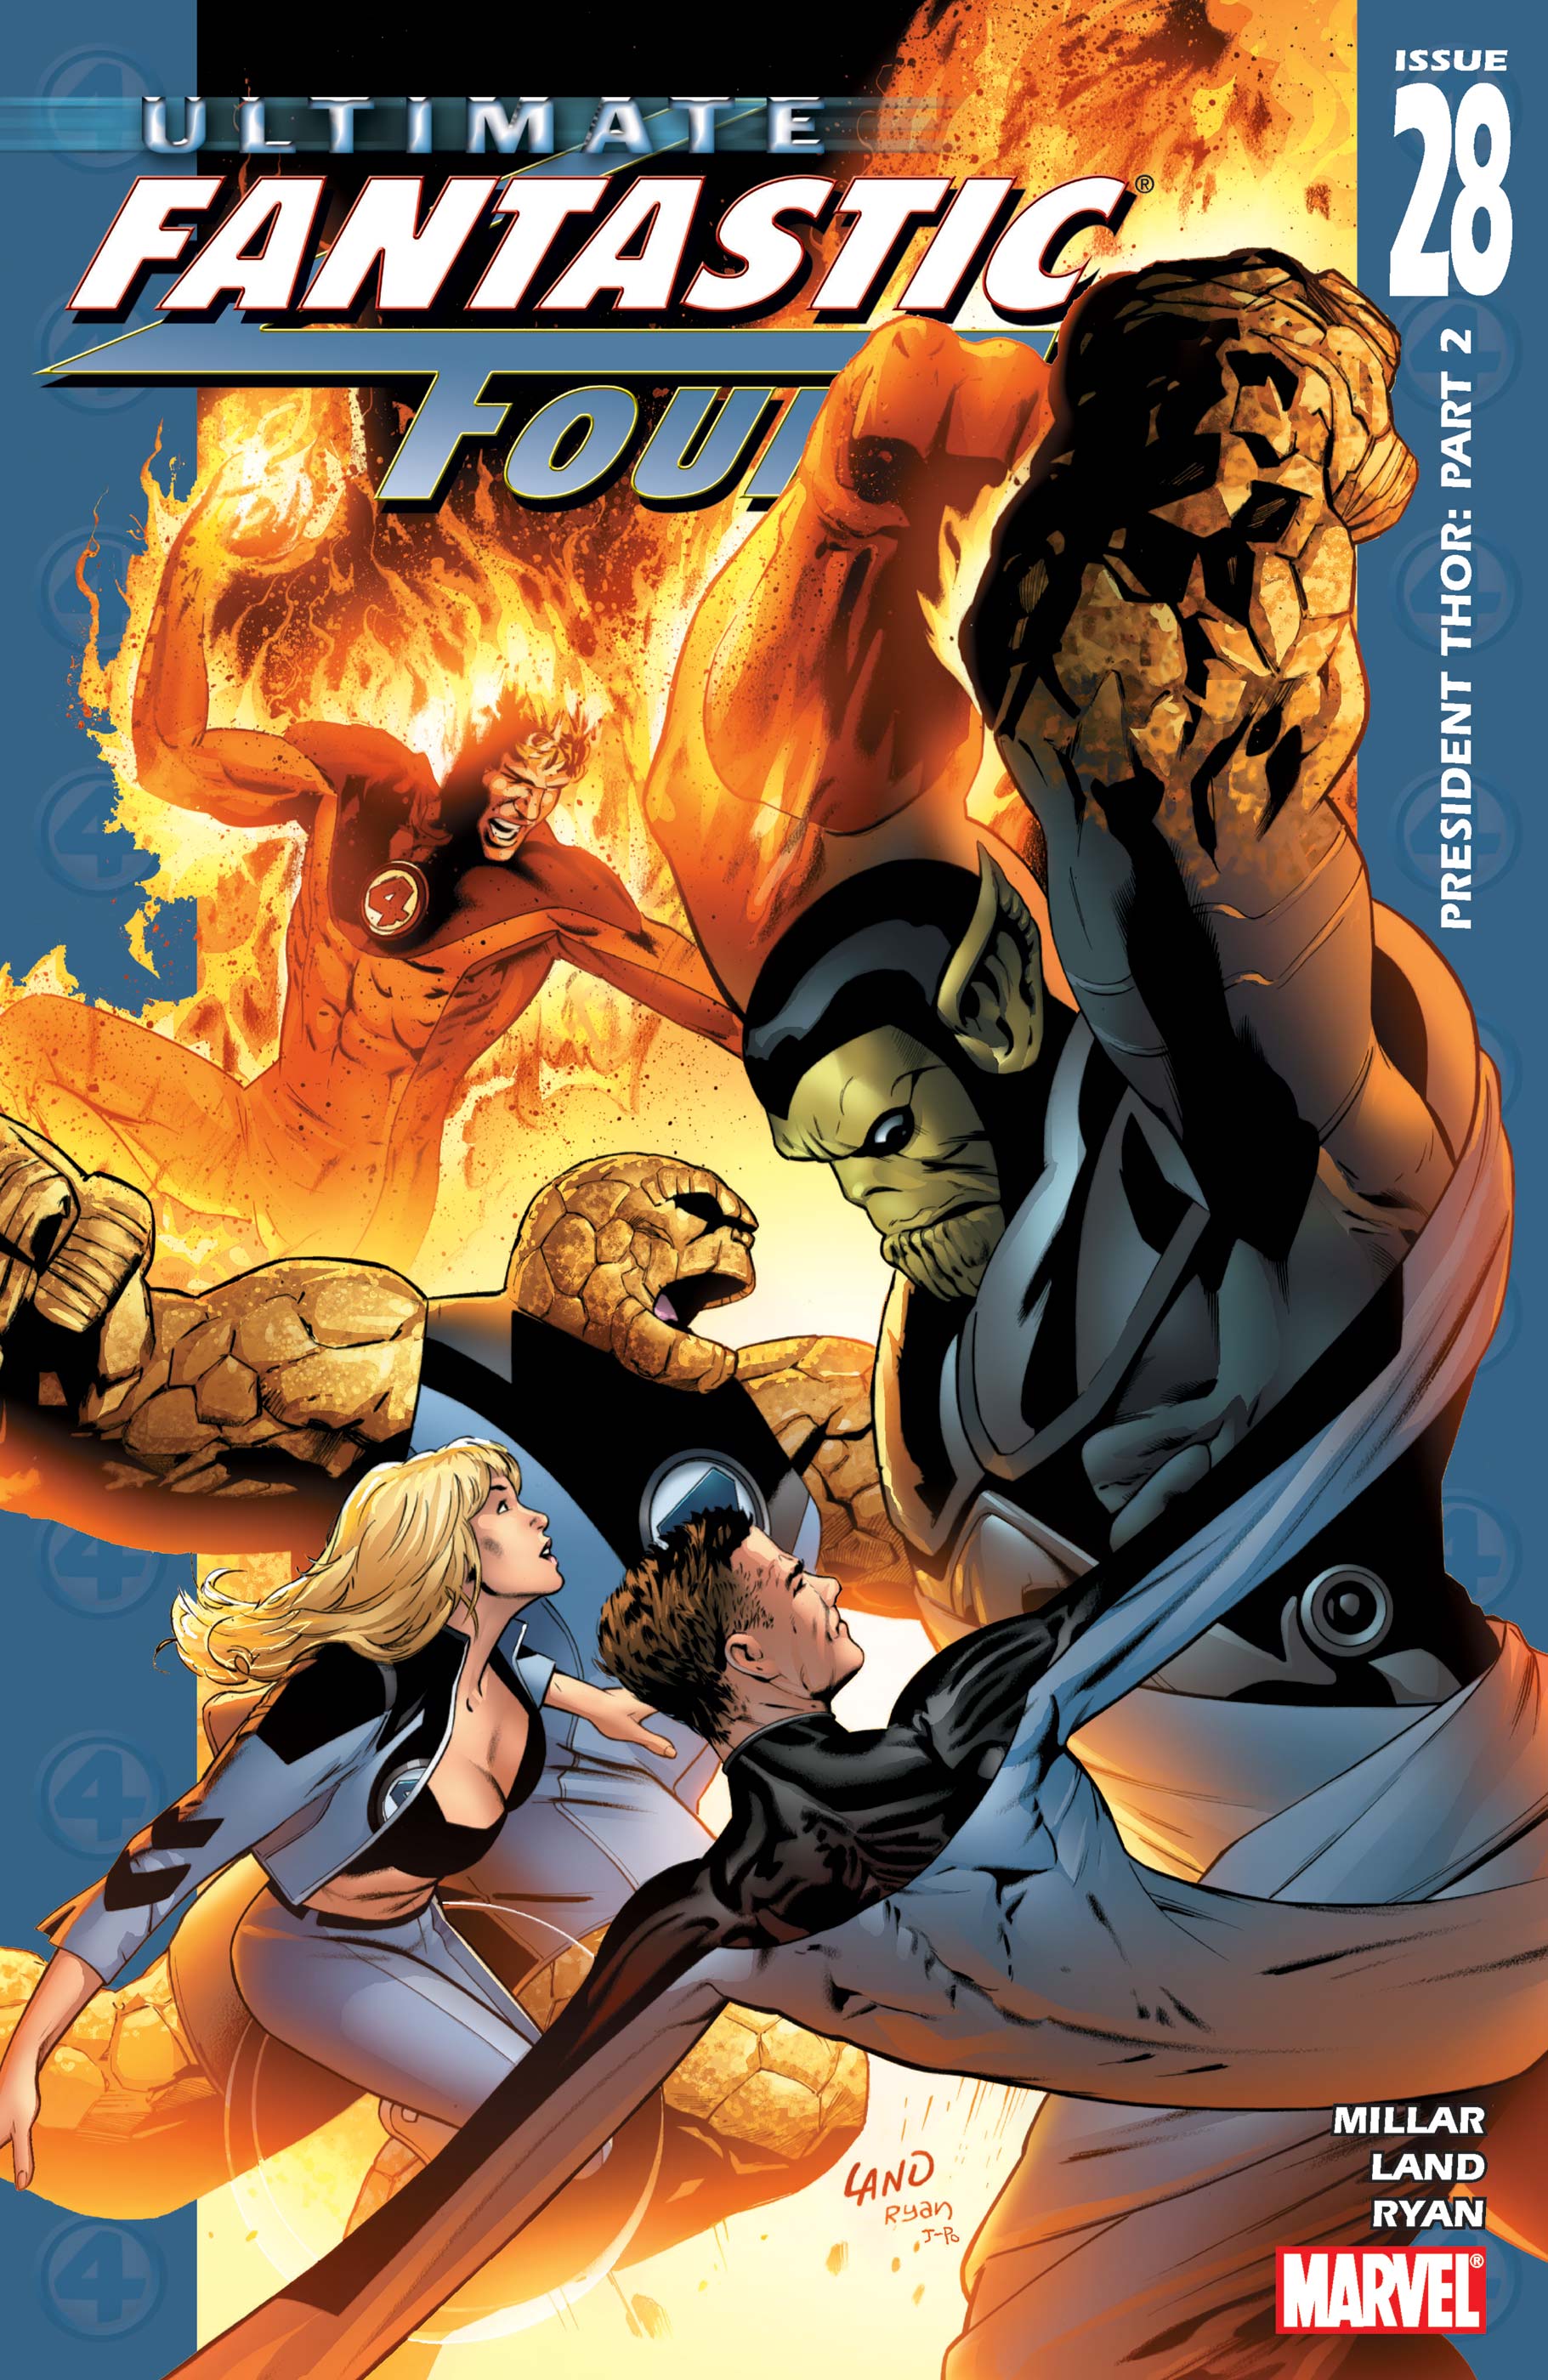 Ultimate Fantastic Four (2003) #28